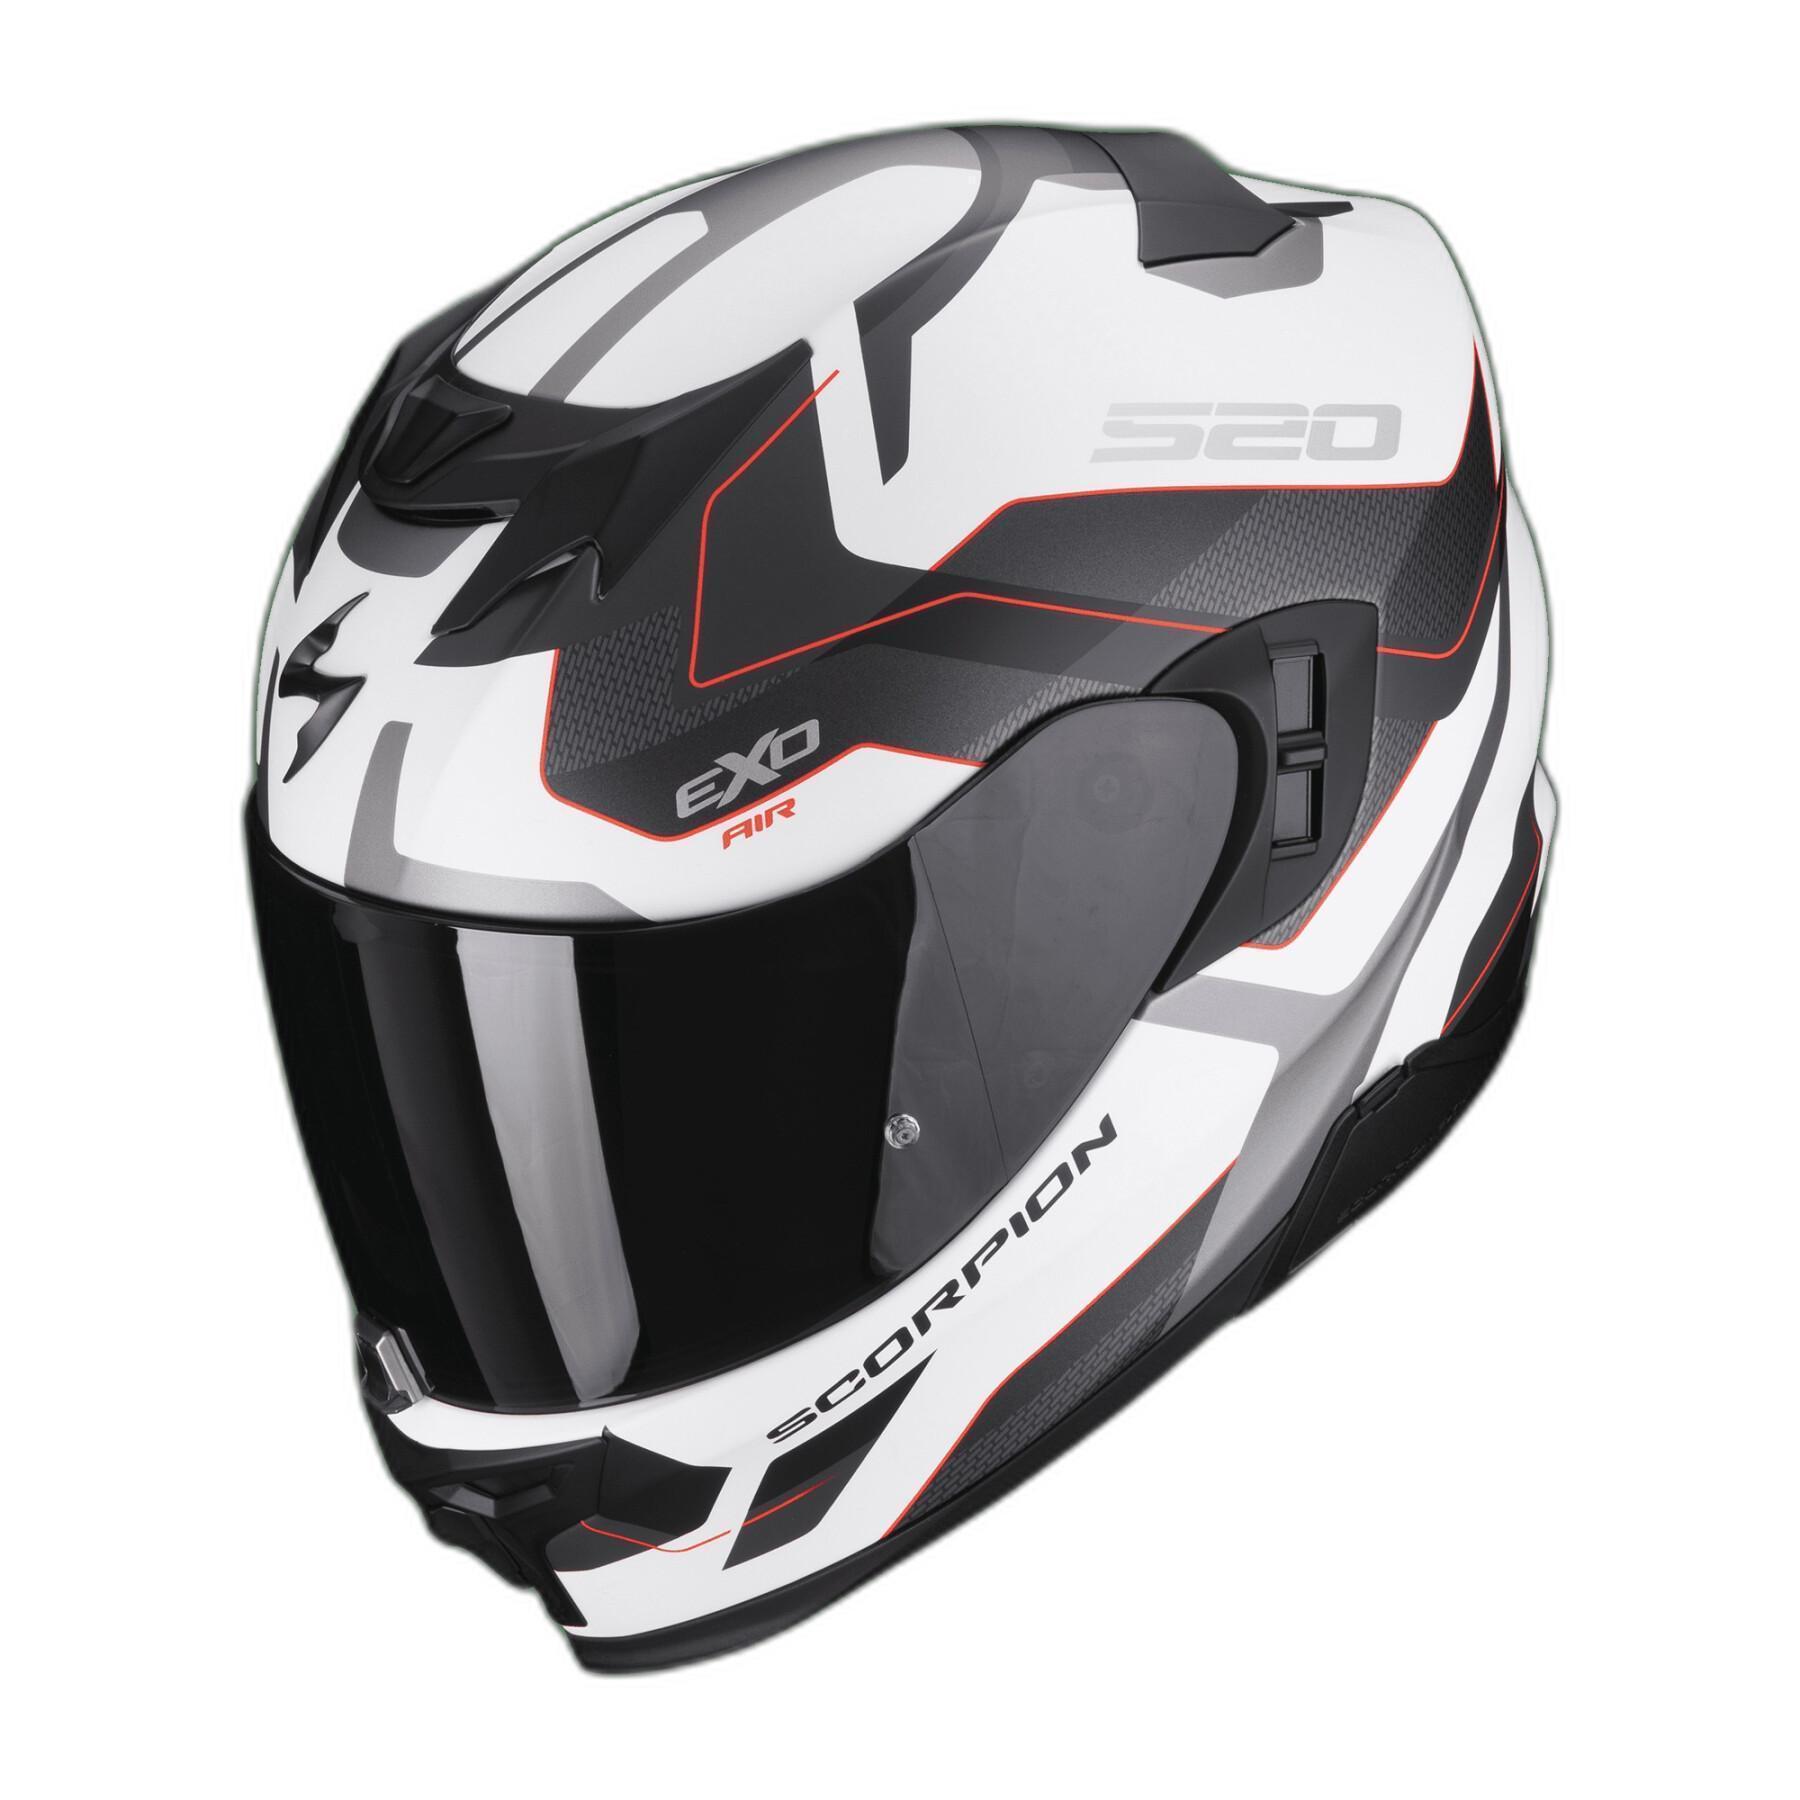 Full face motorcycle helmet Scorpion Exo-520 Evo Air Elan ECE 22-06